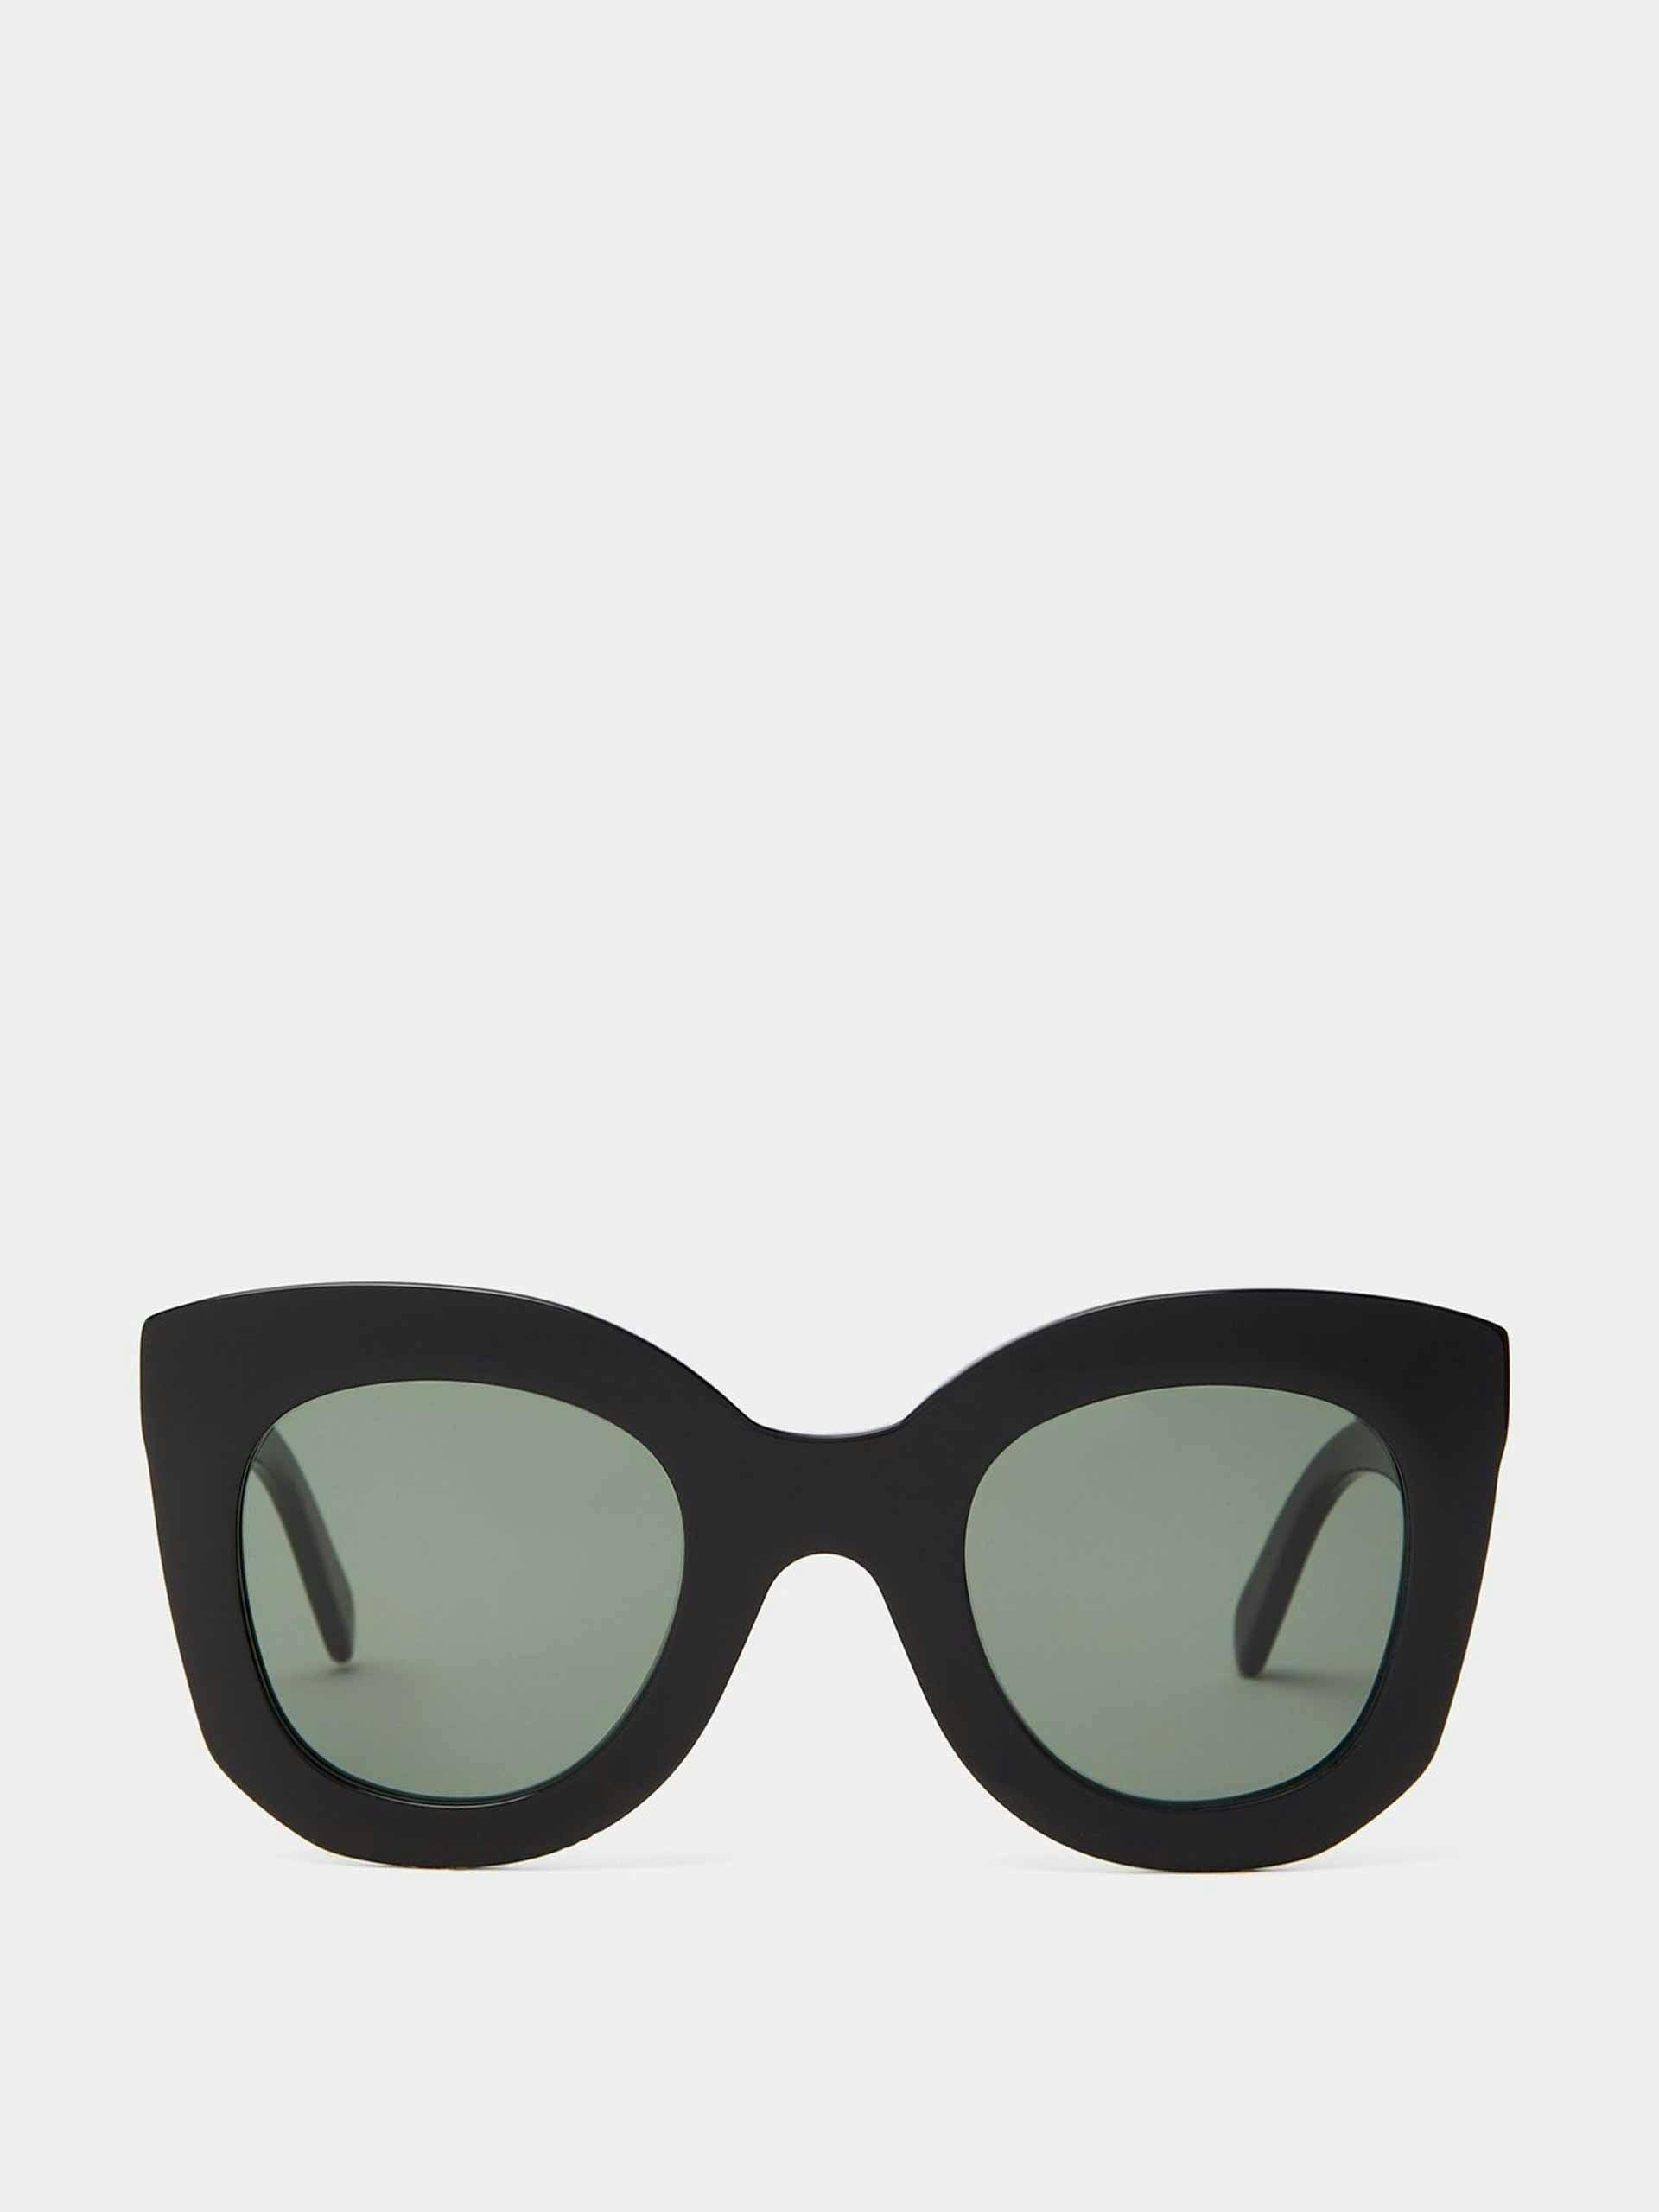 Black oversized round sunglasses